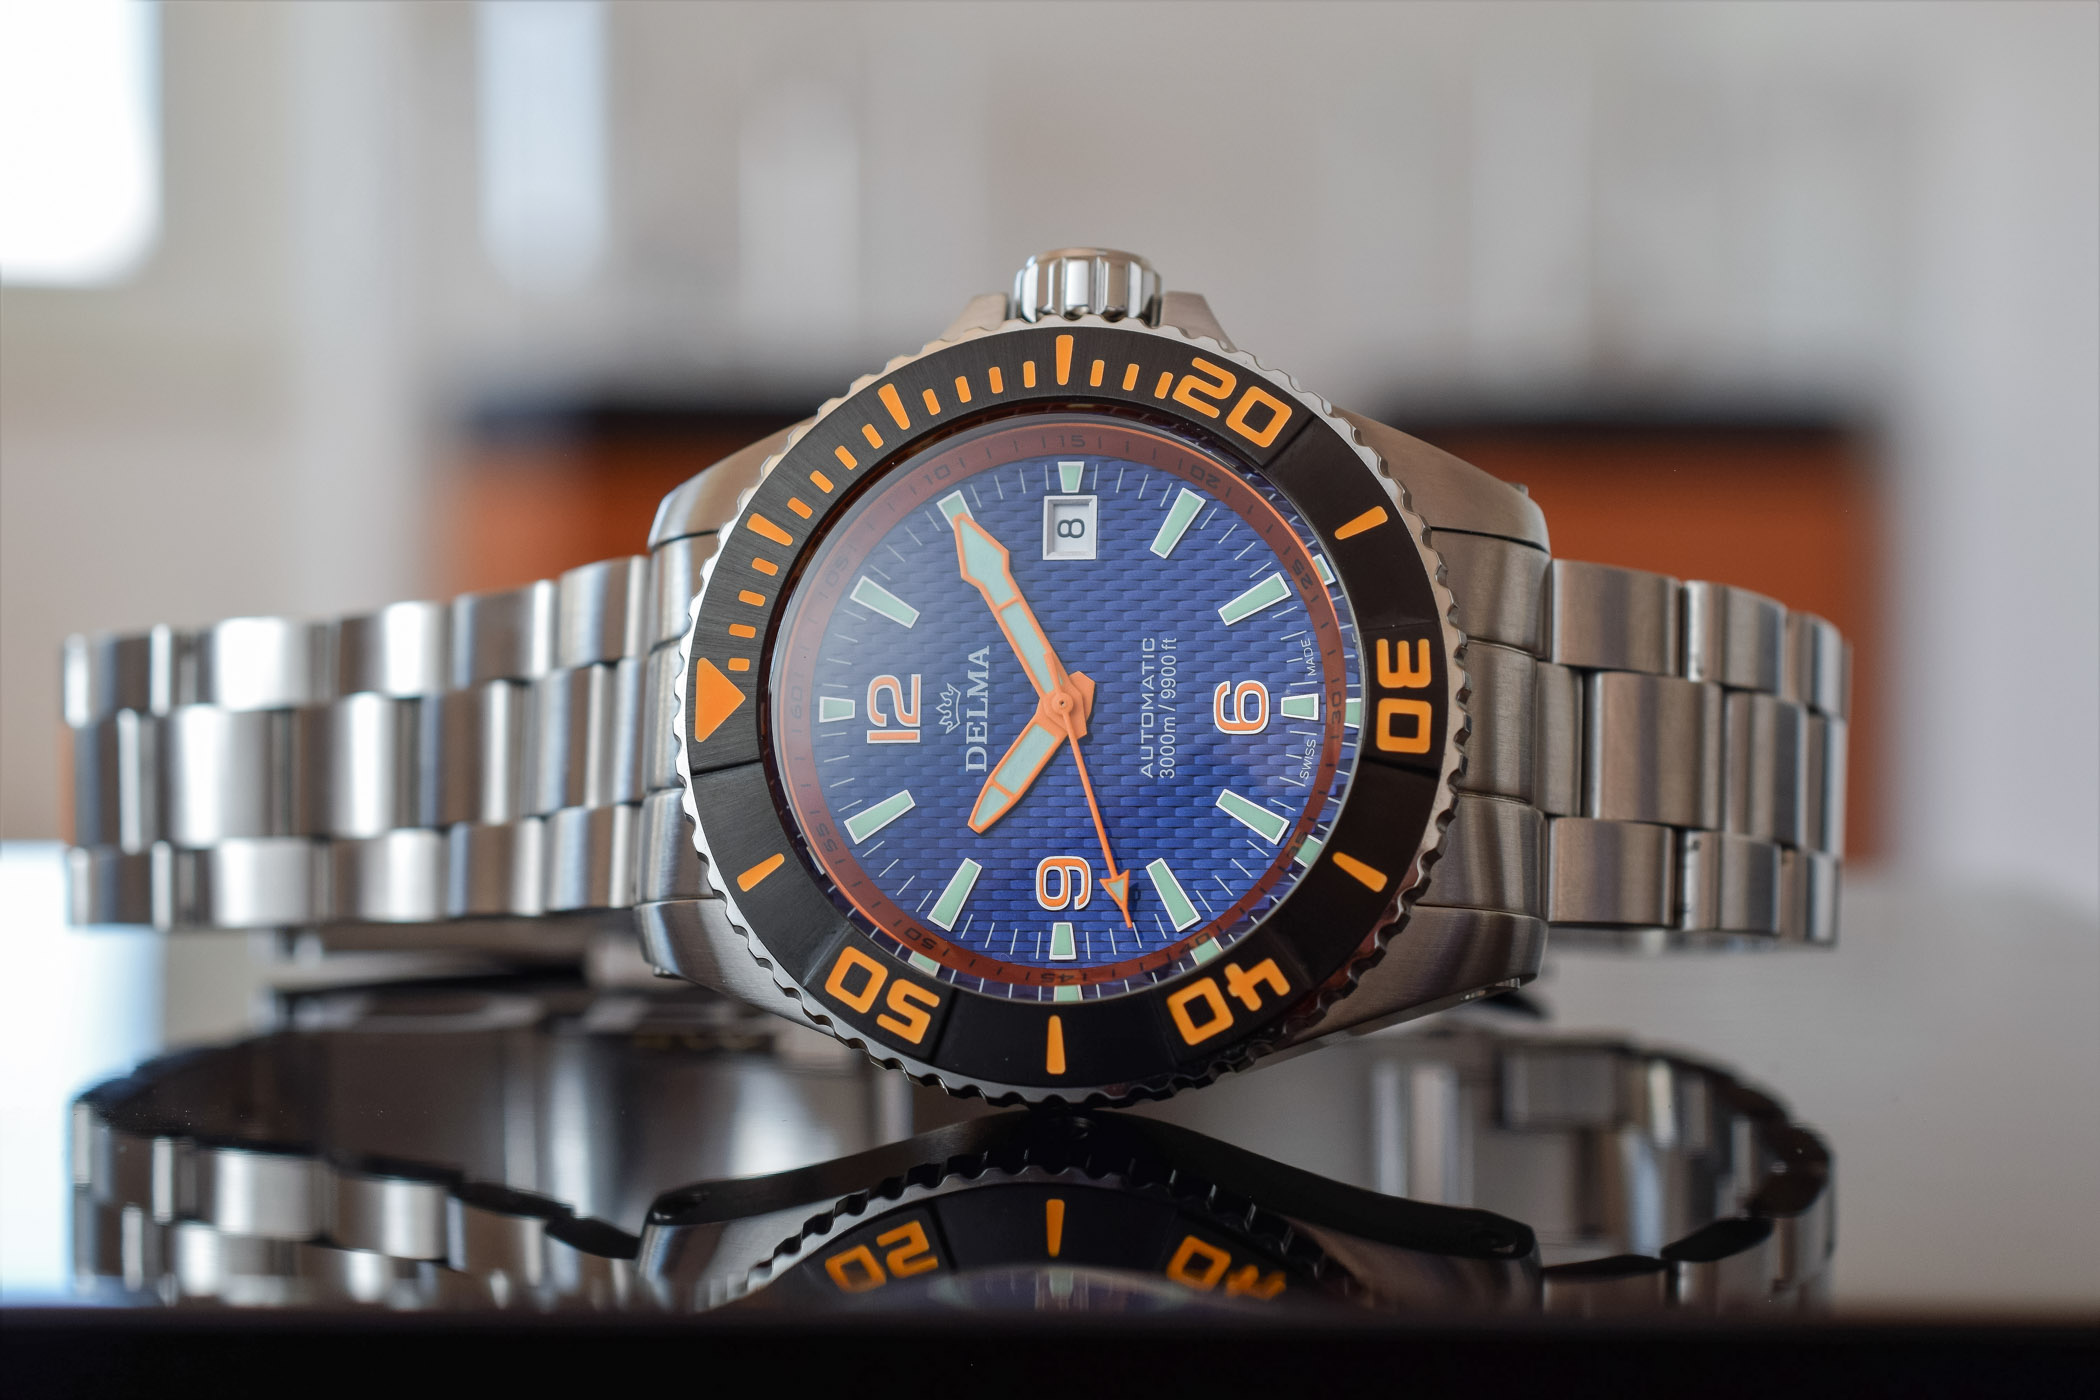 Delma Blue Shark II 3000m Dive Watch